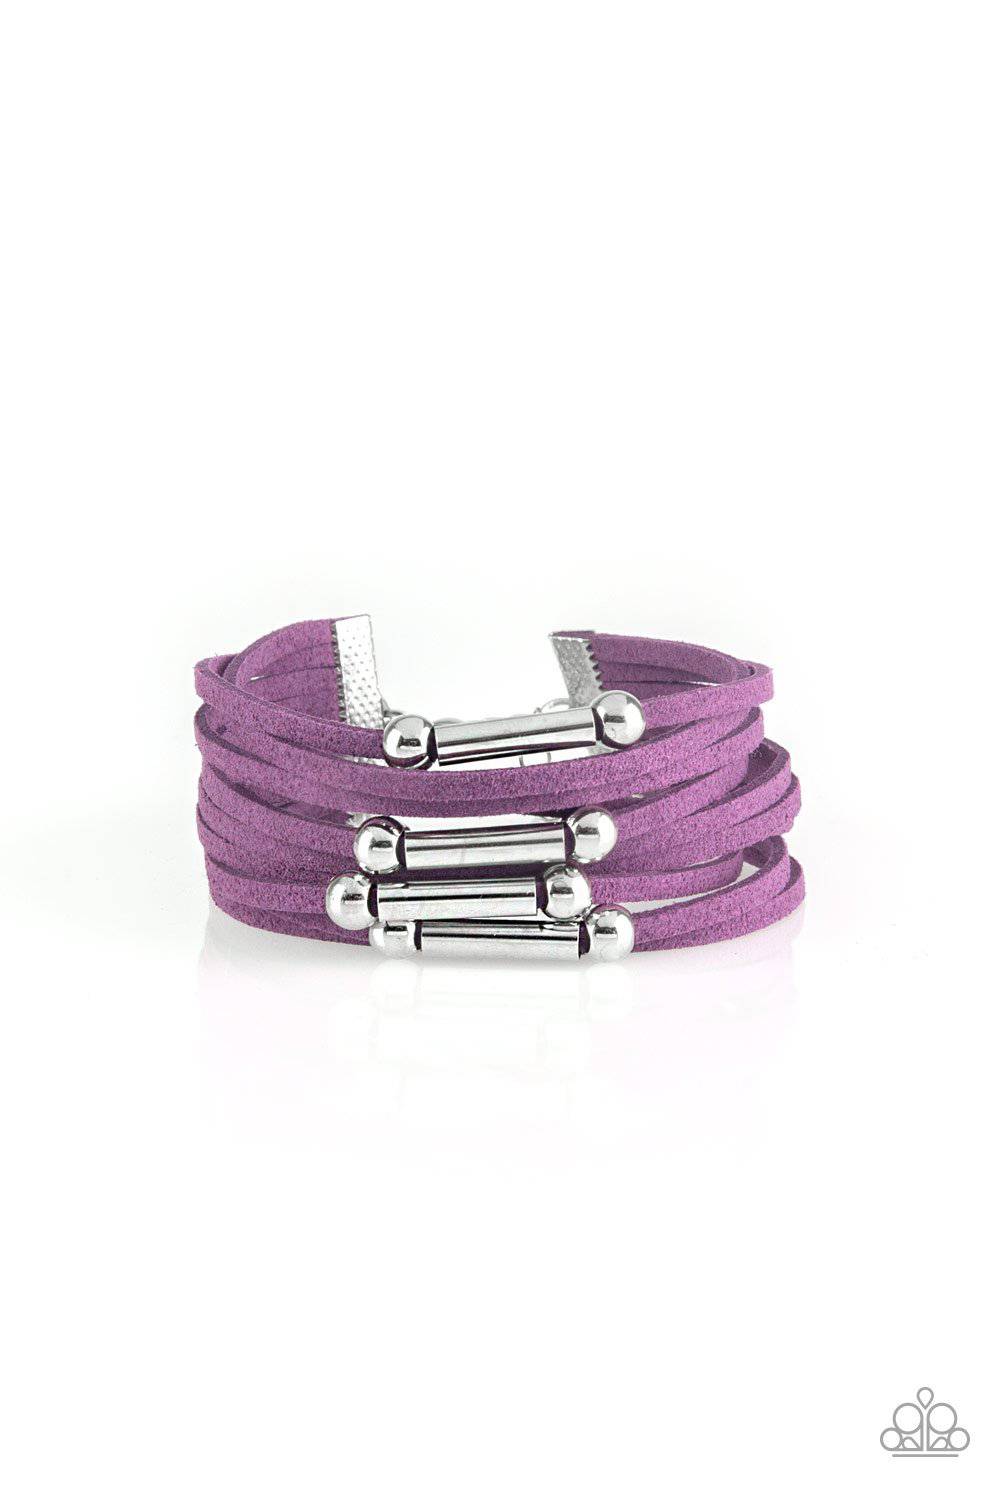 Back To BACKPACKER - Purple Suede Bracelet - Paparazzi Accessories - GlaMarous Titi Jewels